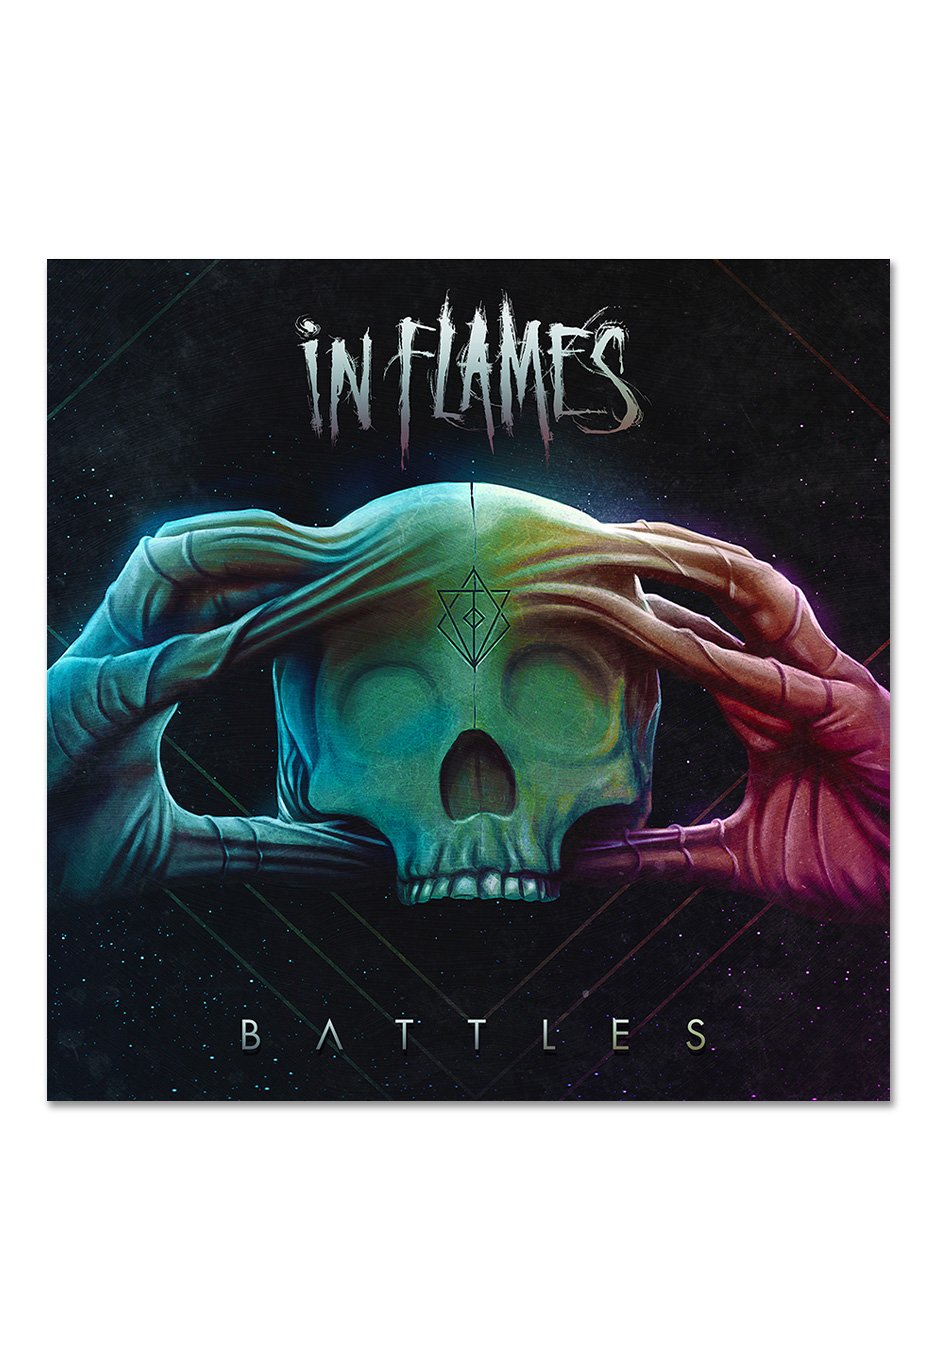 In Flames - Battles Ltd. Silver - Colored 2 Vinyl